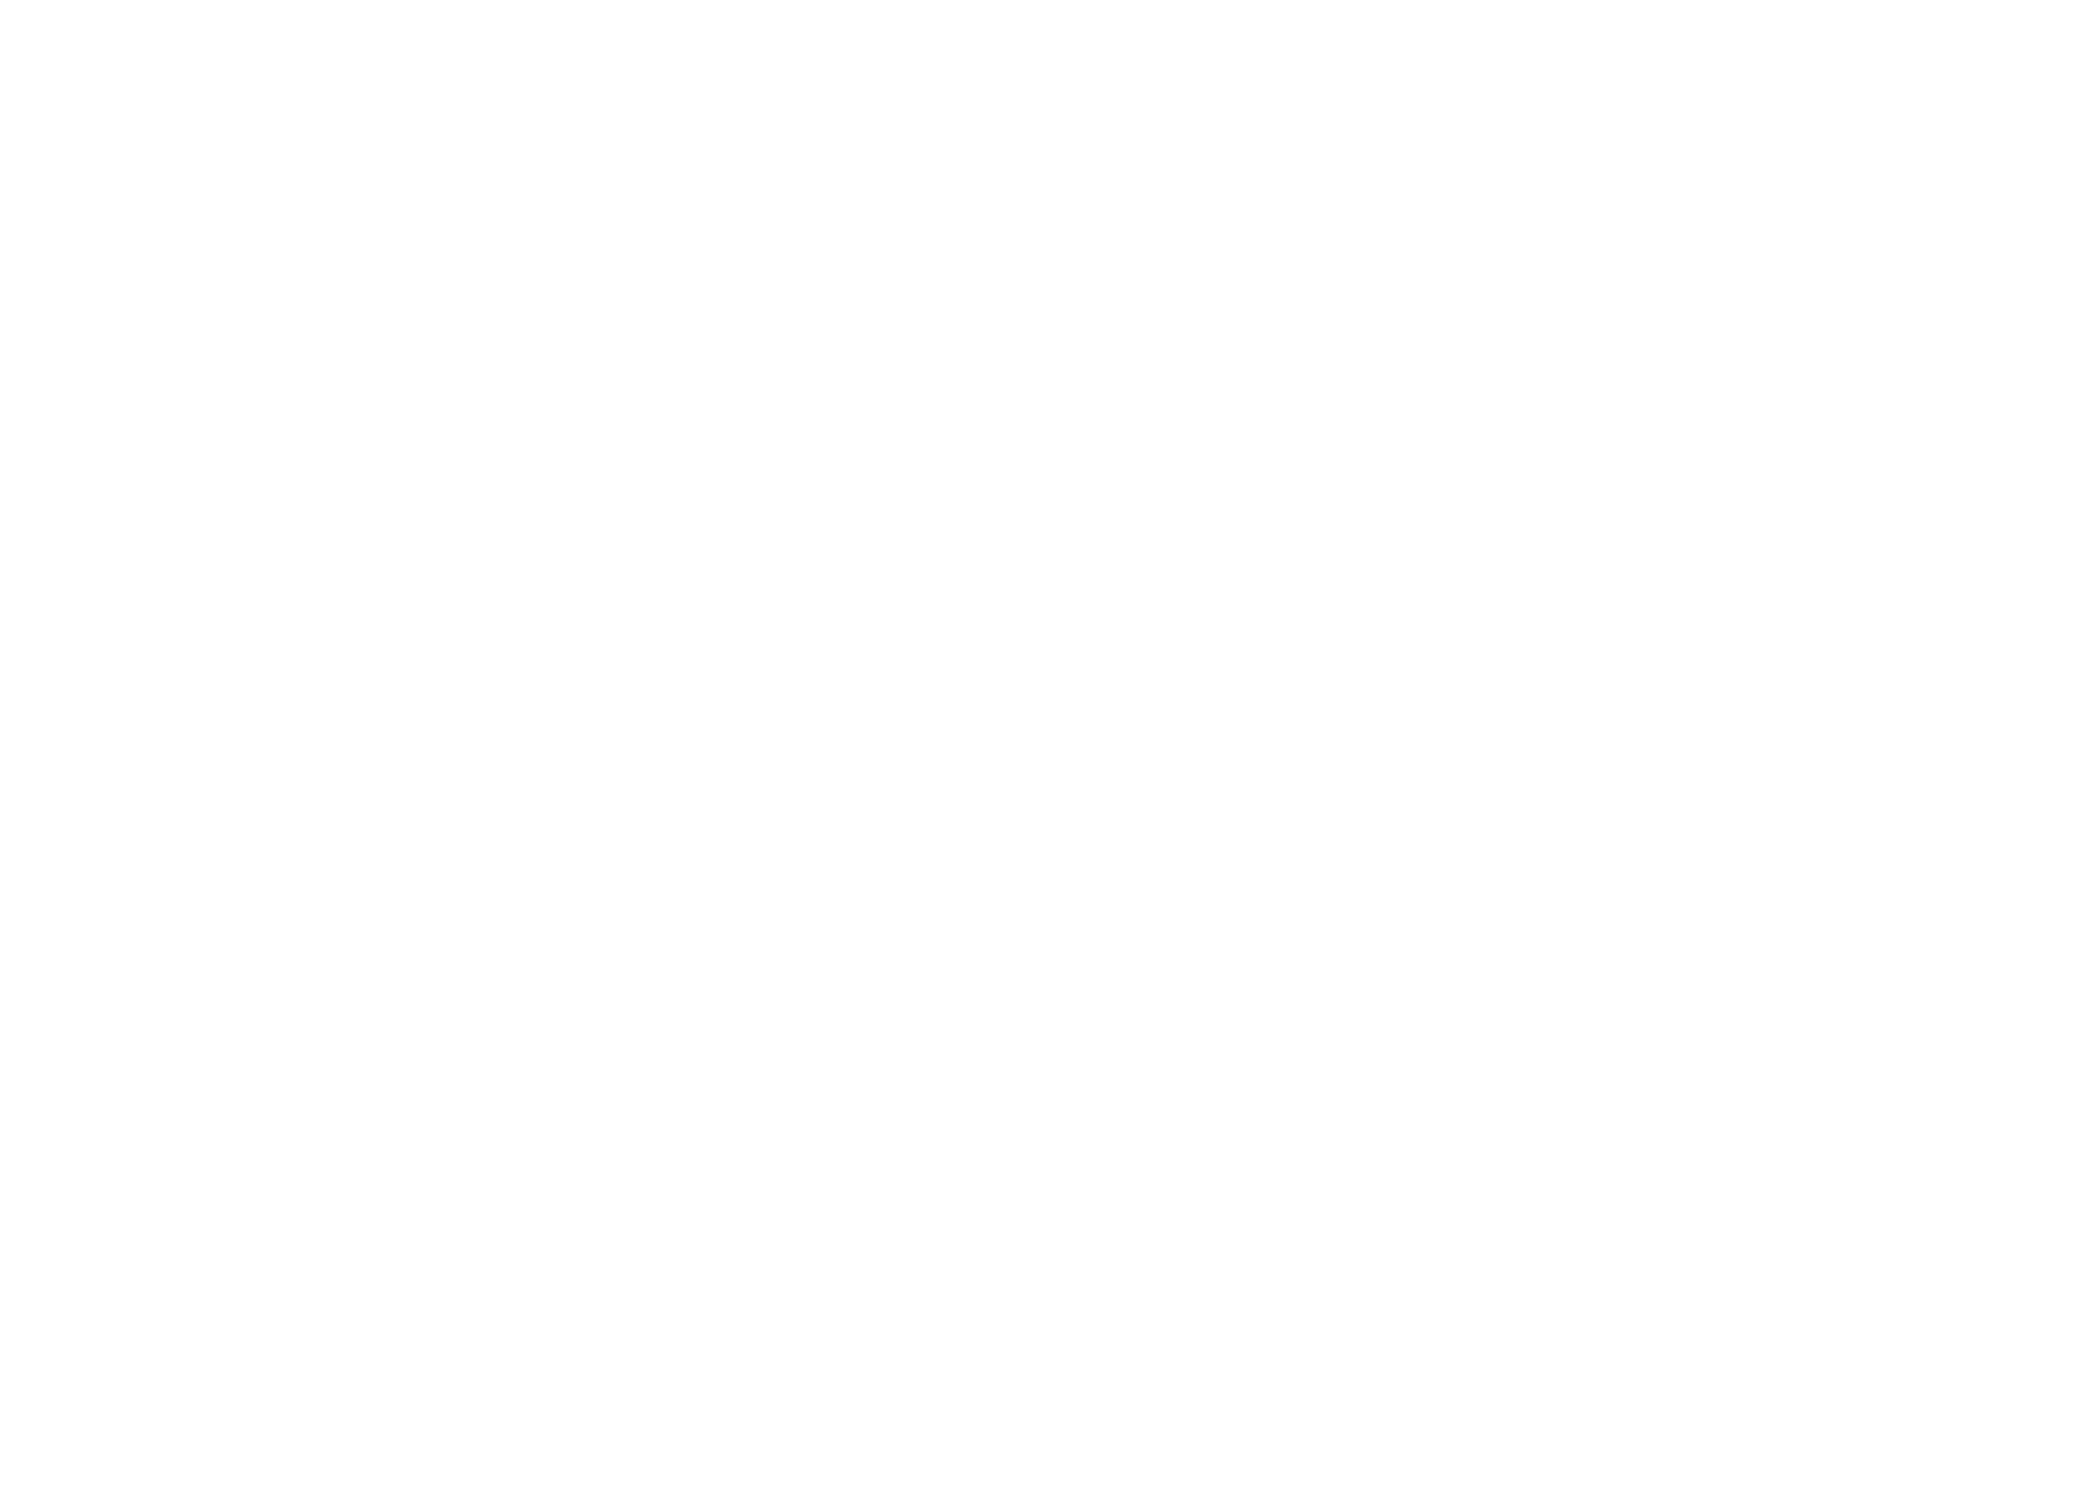 Higher Purpose Music Group